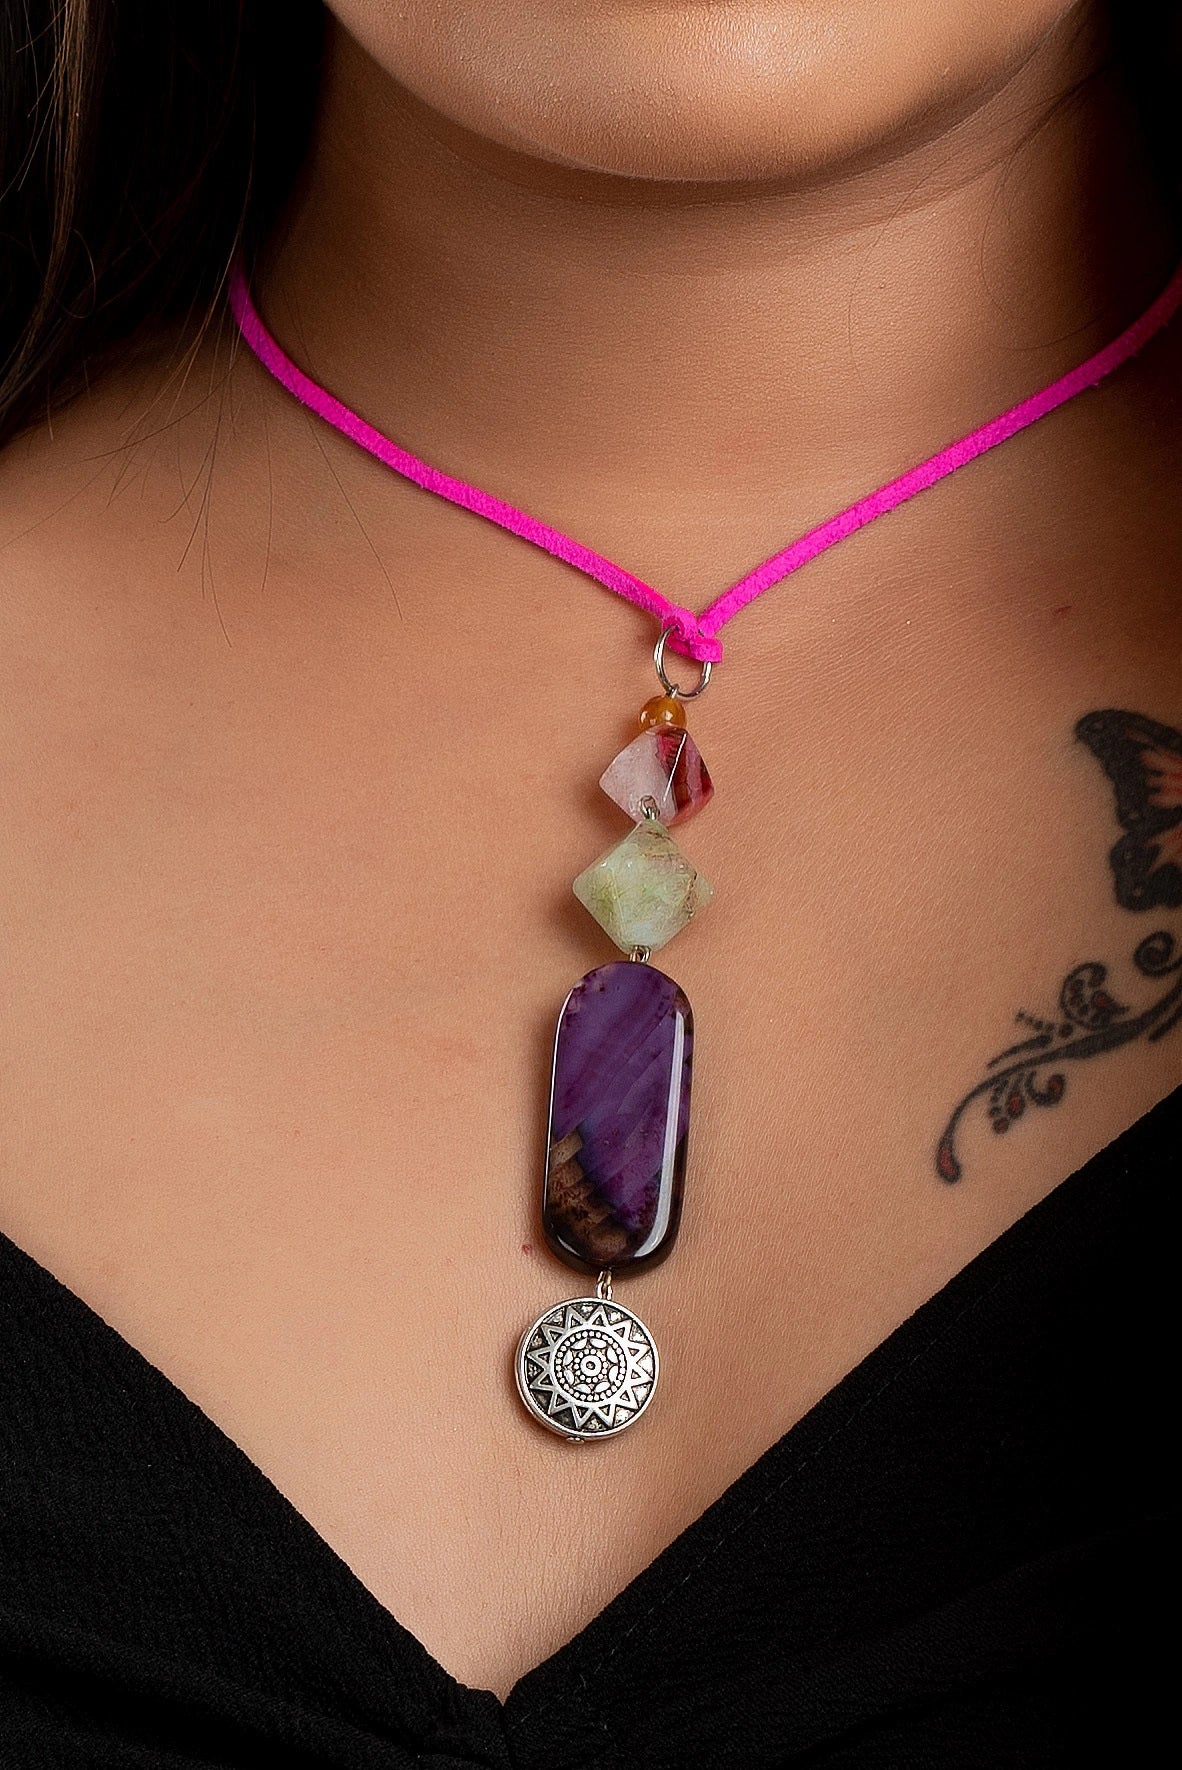 Designer Semi precious stones agate onyx sleek Neckpiece Strung with Pink Adjustable Suede cord